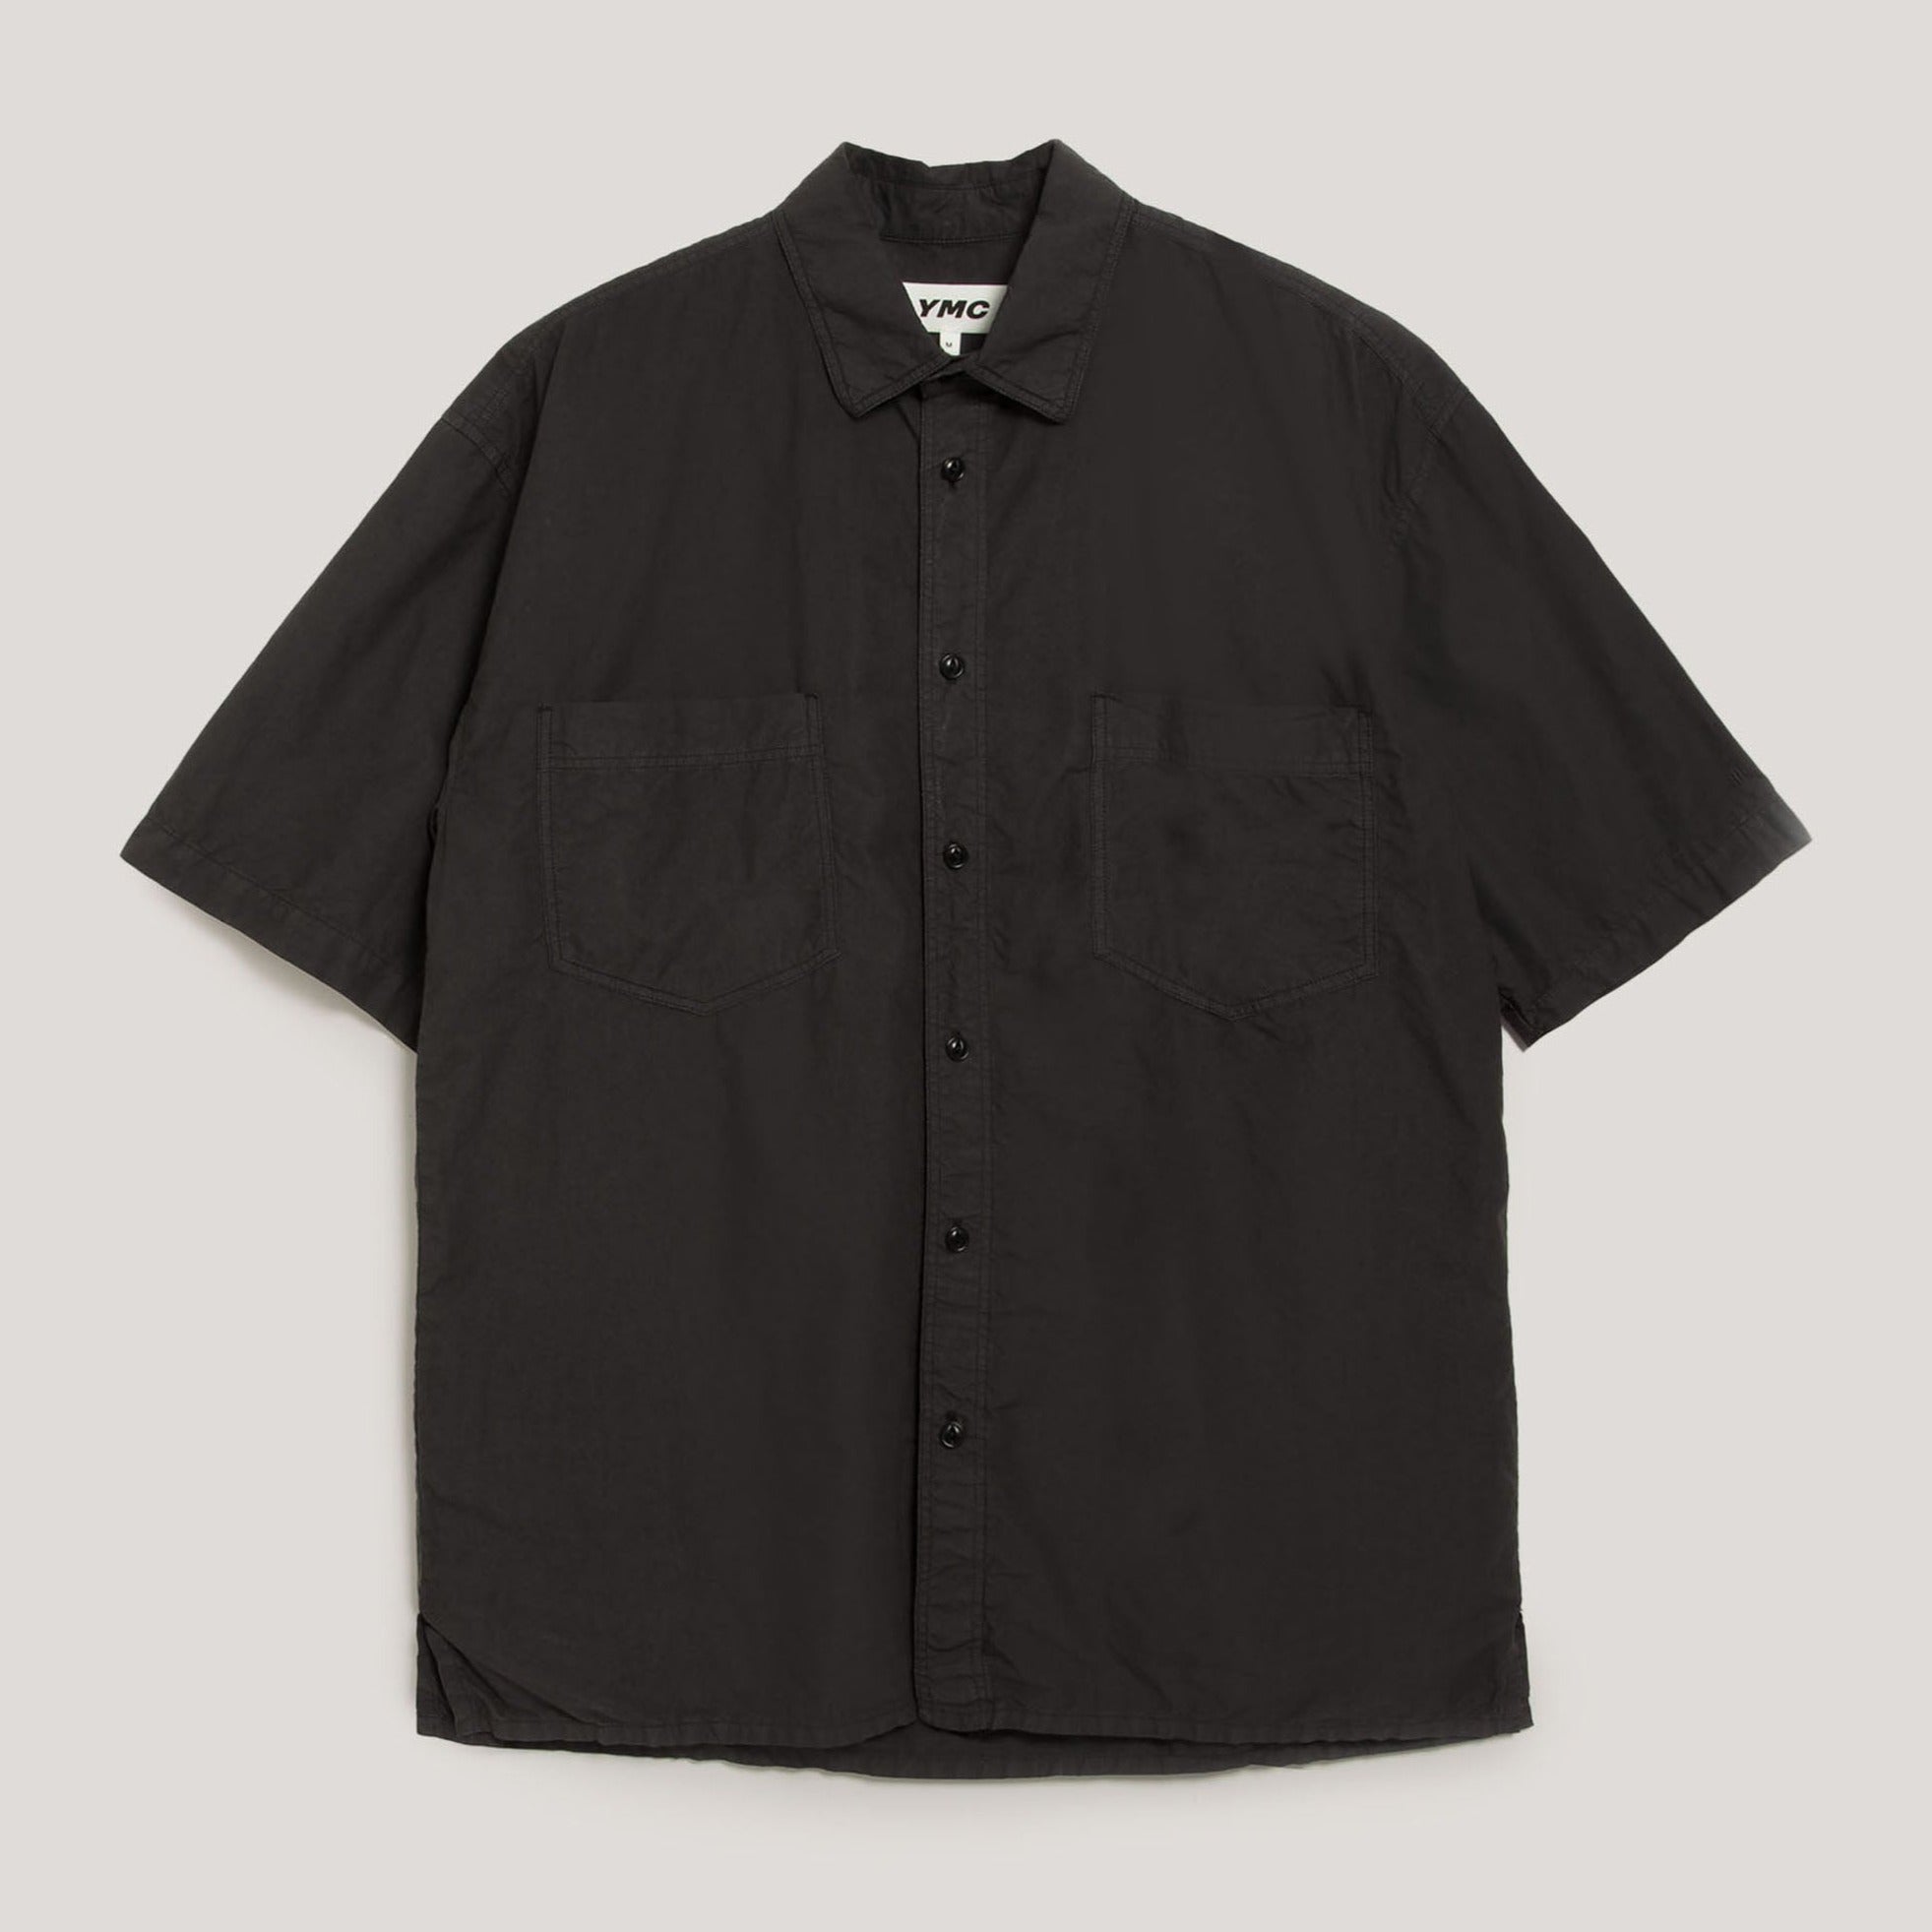 YMC Mitchum Shirt - Black